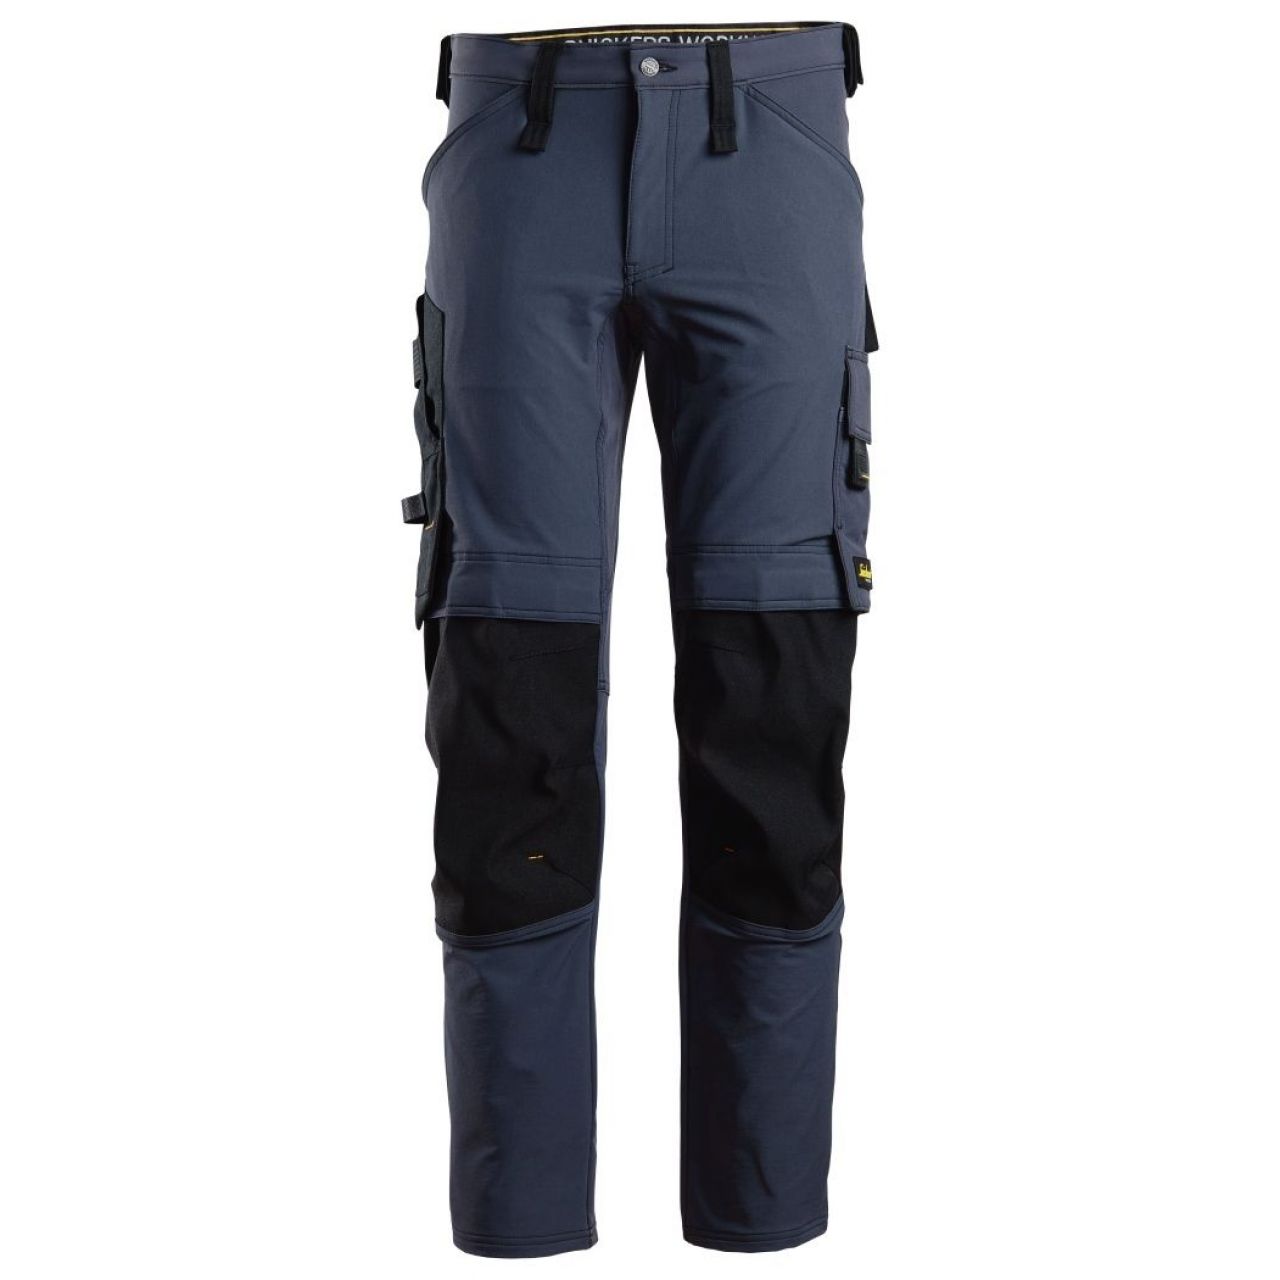 Pantalon elastico AllroundWork azul marino-negro talla 256